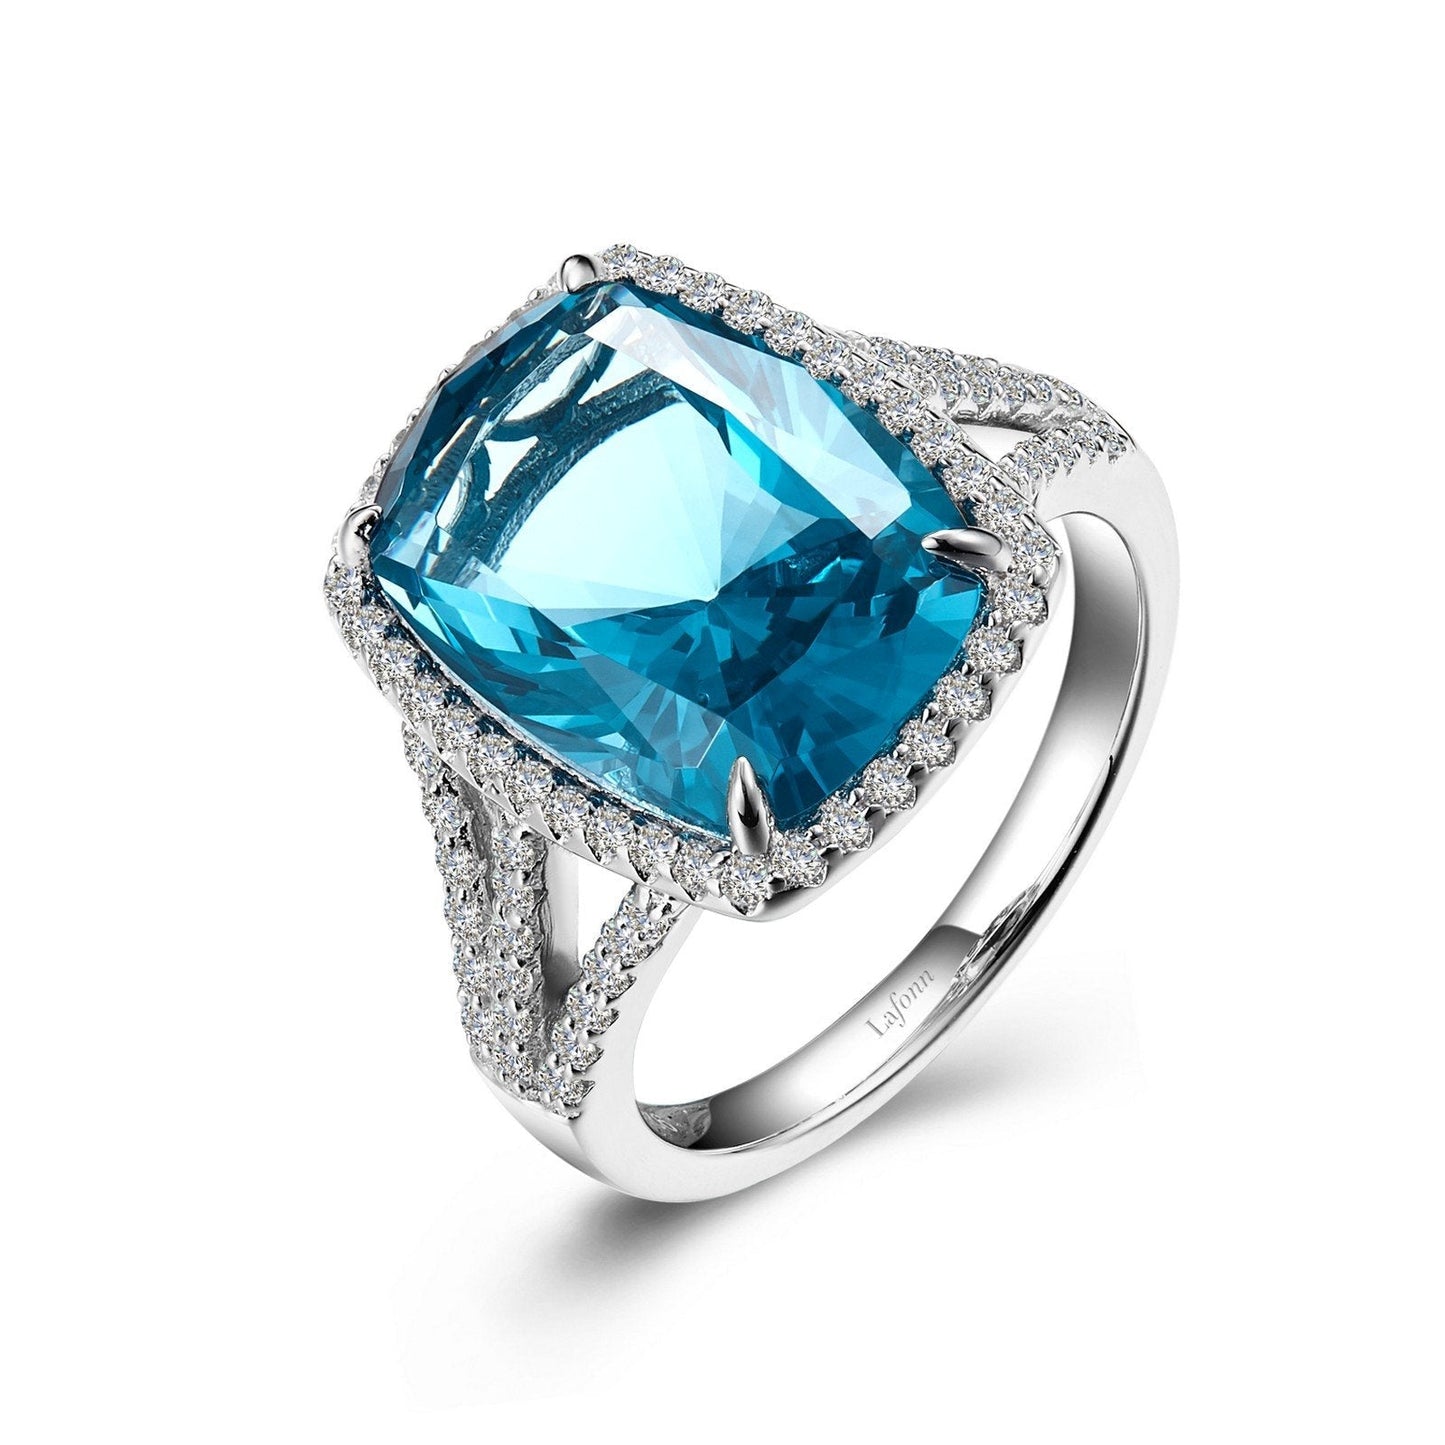 Lafonn Cushion-Cut Halo Engagement Ring Paraiba Tourmaline RINGS Size 7 Platinum 10.26 CTS Approx.16.7(H)*12.8(W)